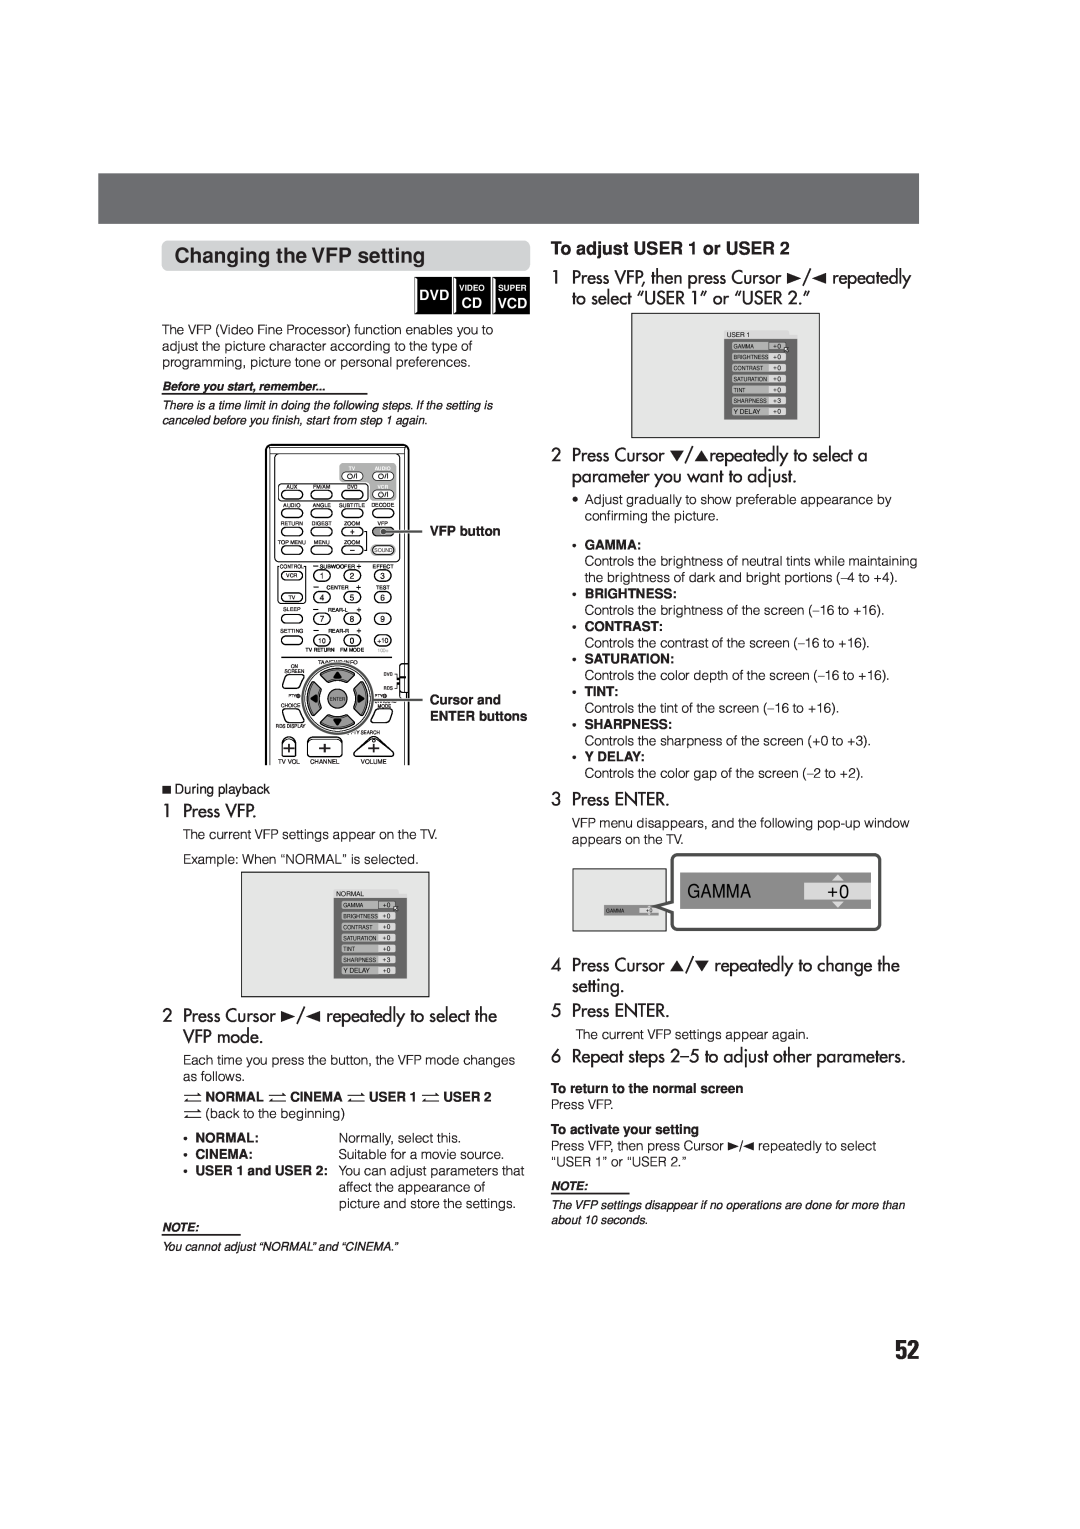 JVC XV-THV70R manual Changing the VFP setting, Press VFP, To adjust USER 1 or USER, 5Press ENTER, GAMMA +0, 3Press ENTER 